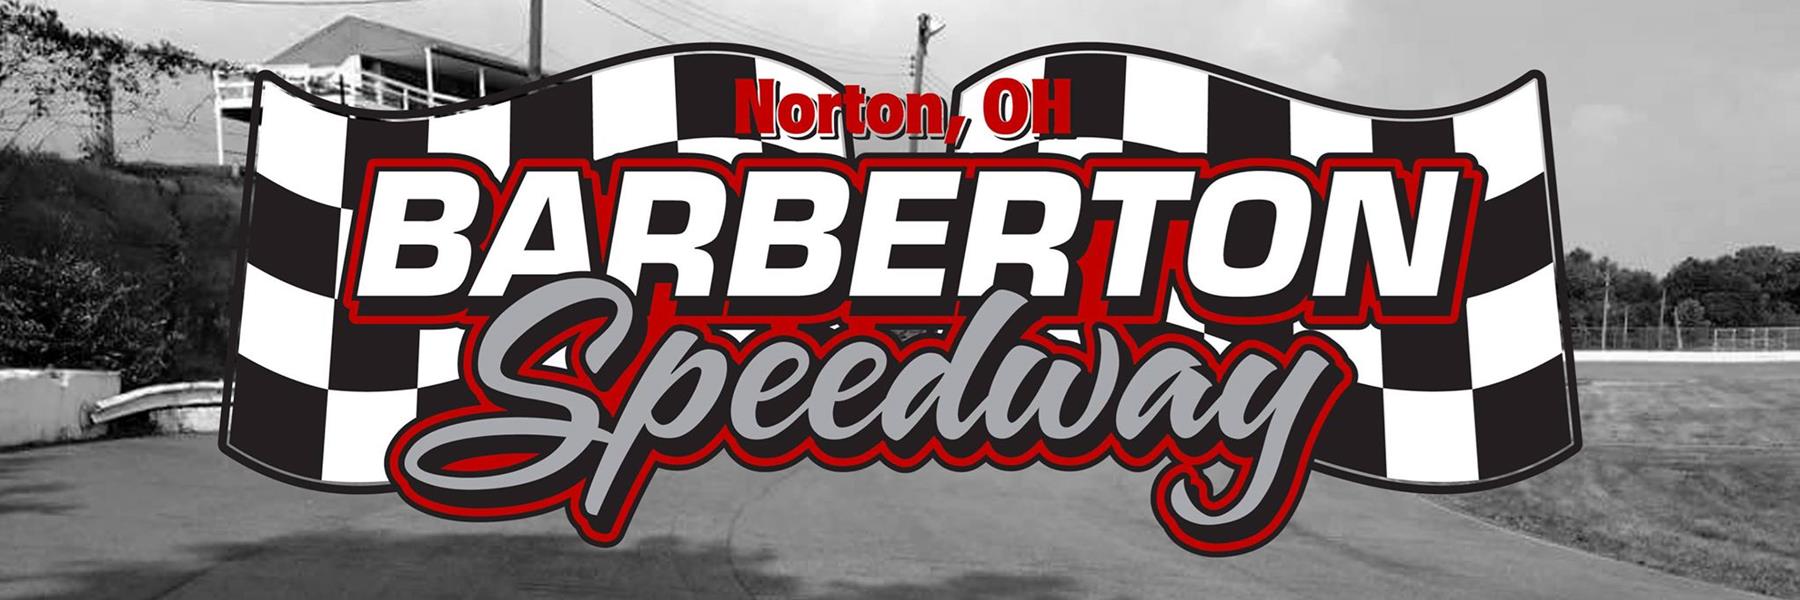 9/25/2021 - Barberton Speedway